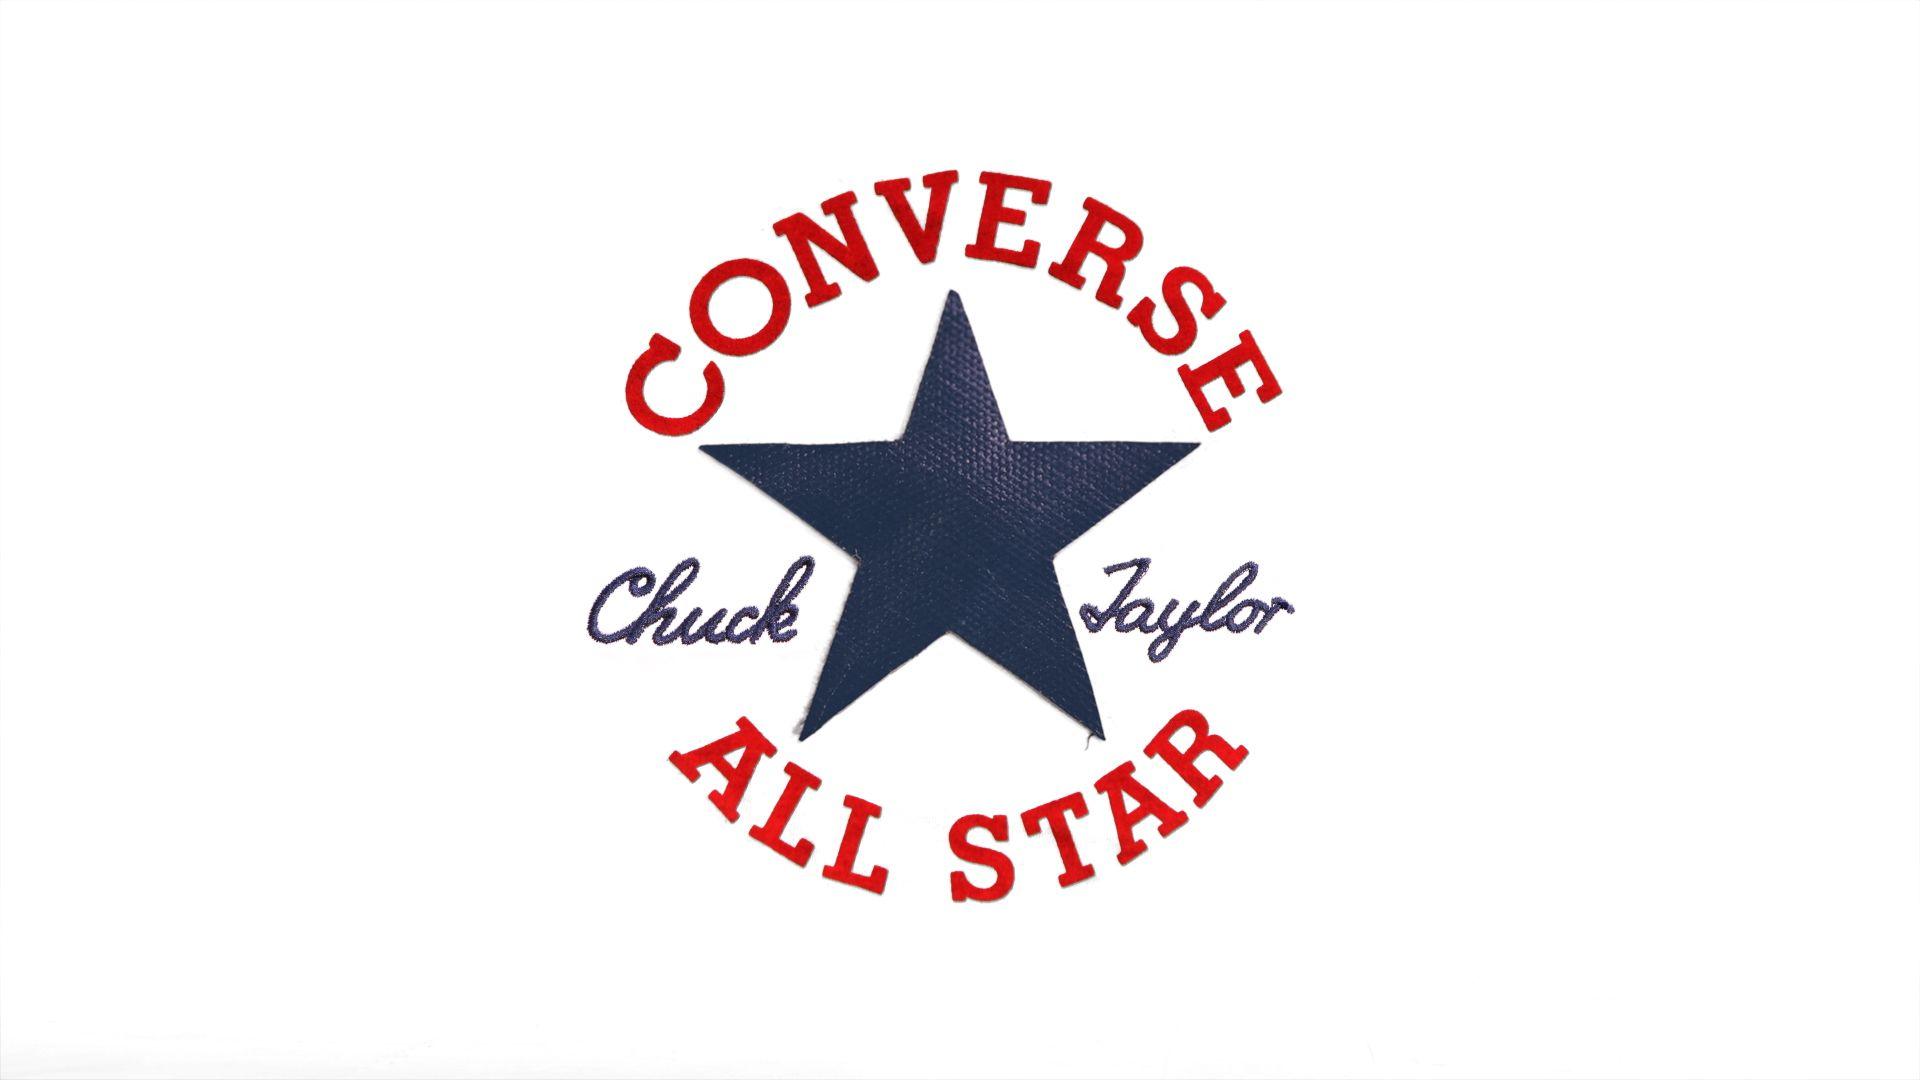 converse all star logo wallpaper